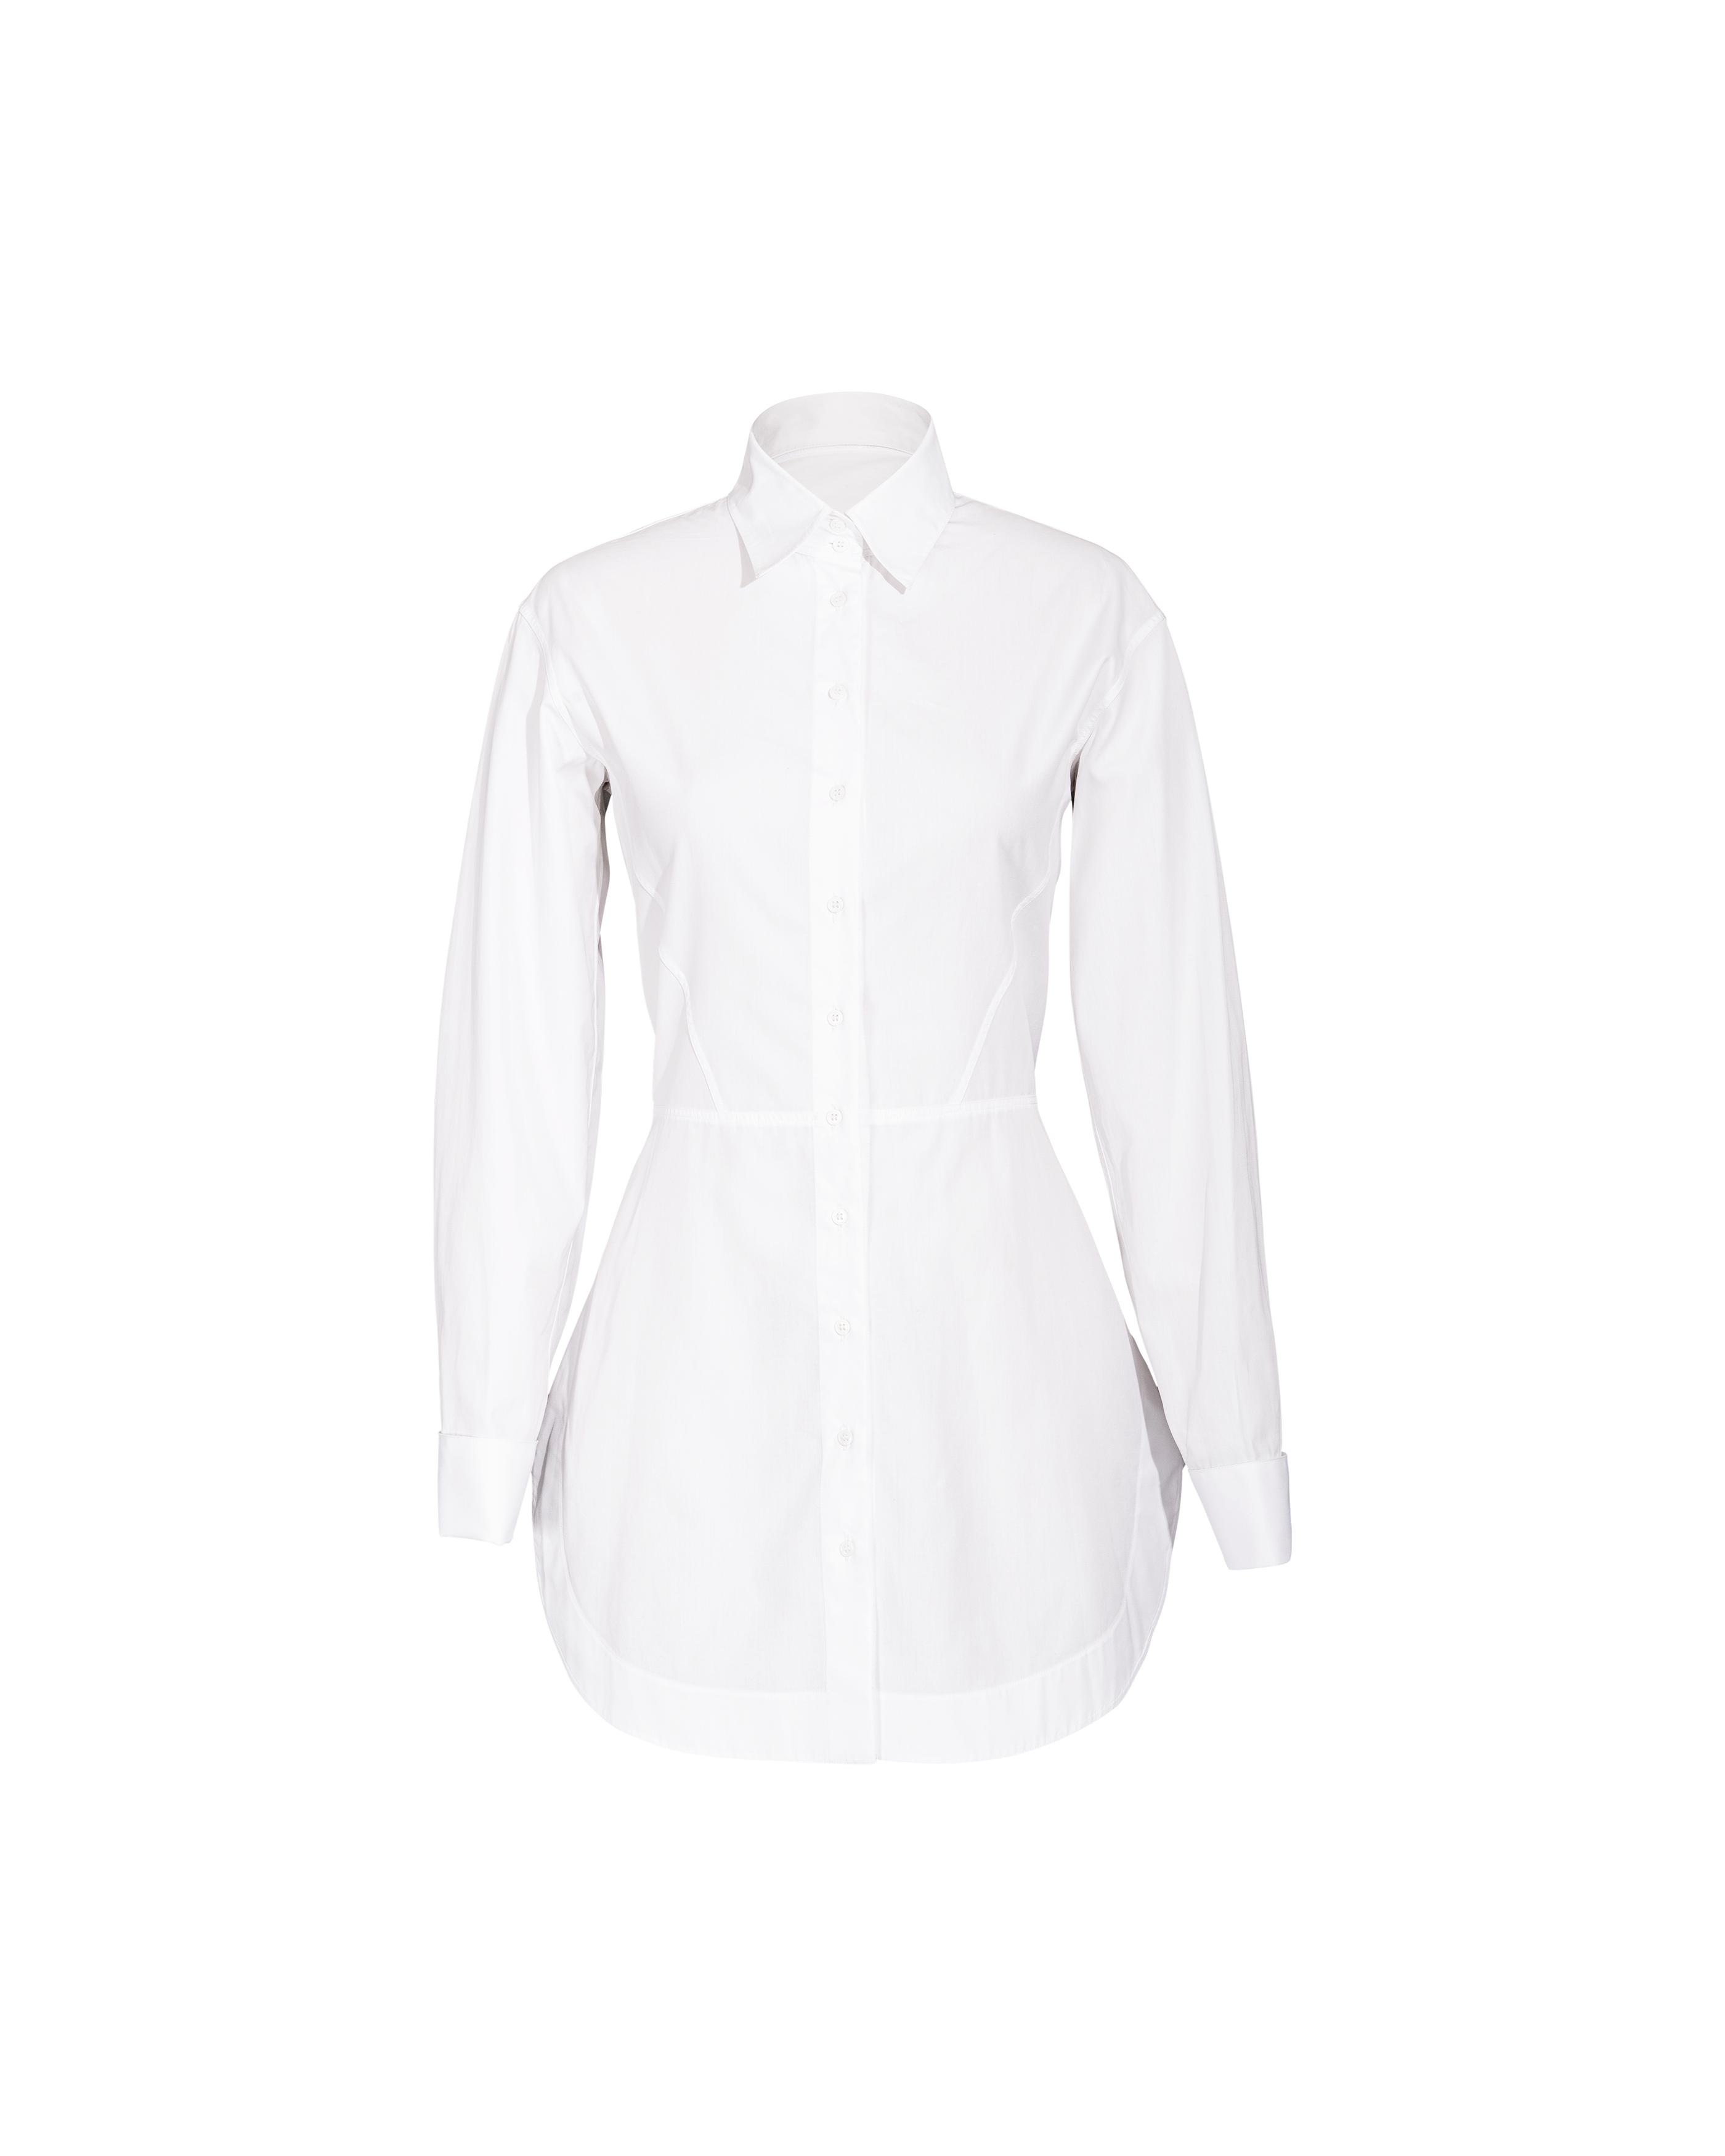 S/S 2020 White Cotton Poplin Button-Up Shirt Dress